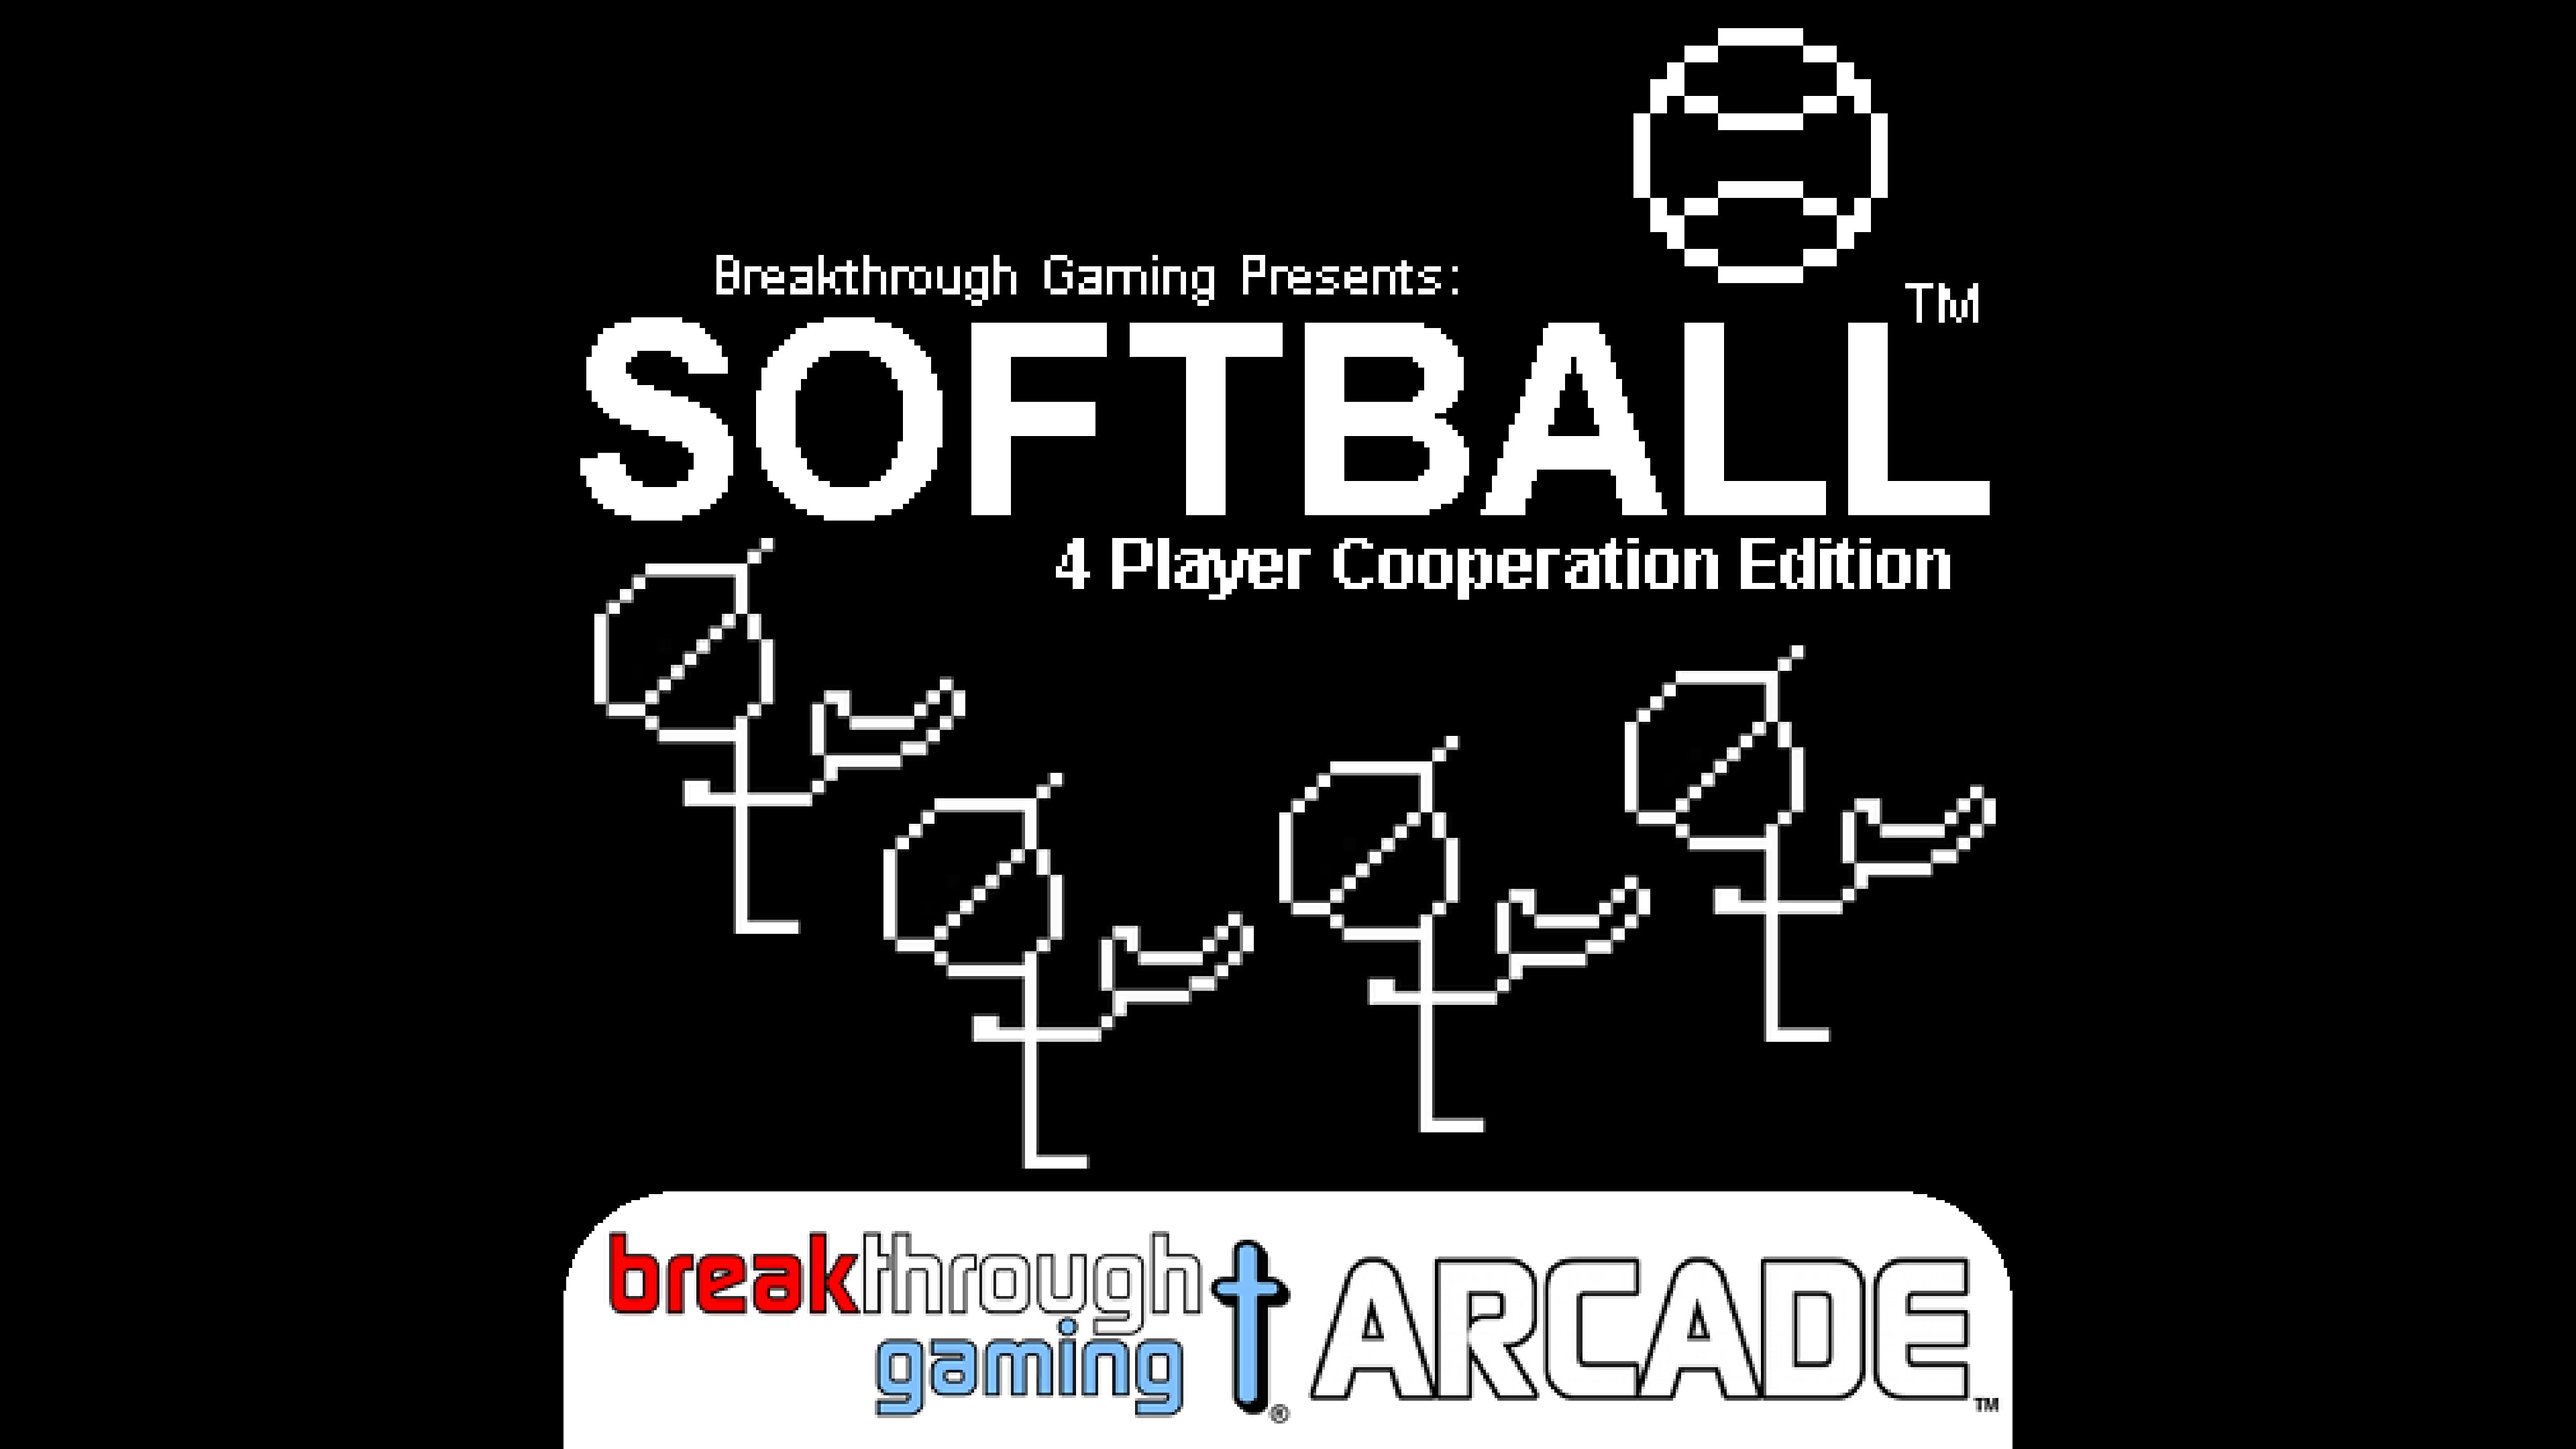 Softball (4 Player Cooperation Edition) - Breakthrough Gaming Arcade